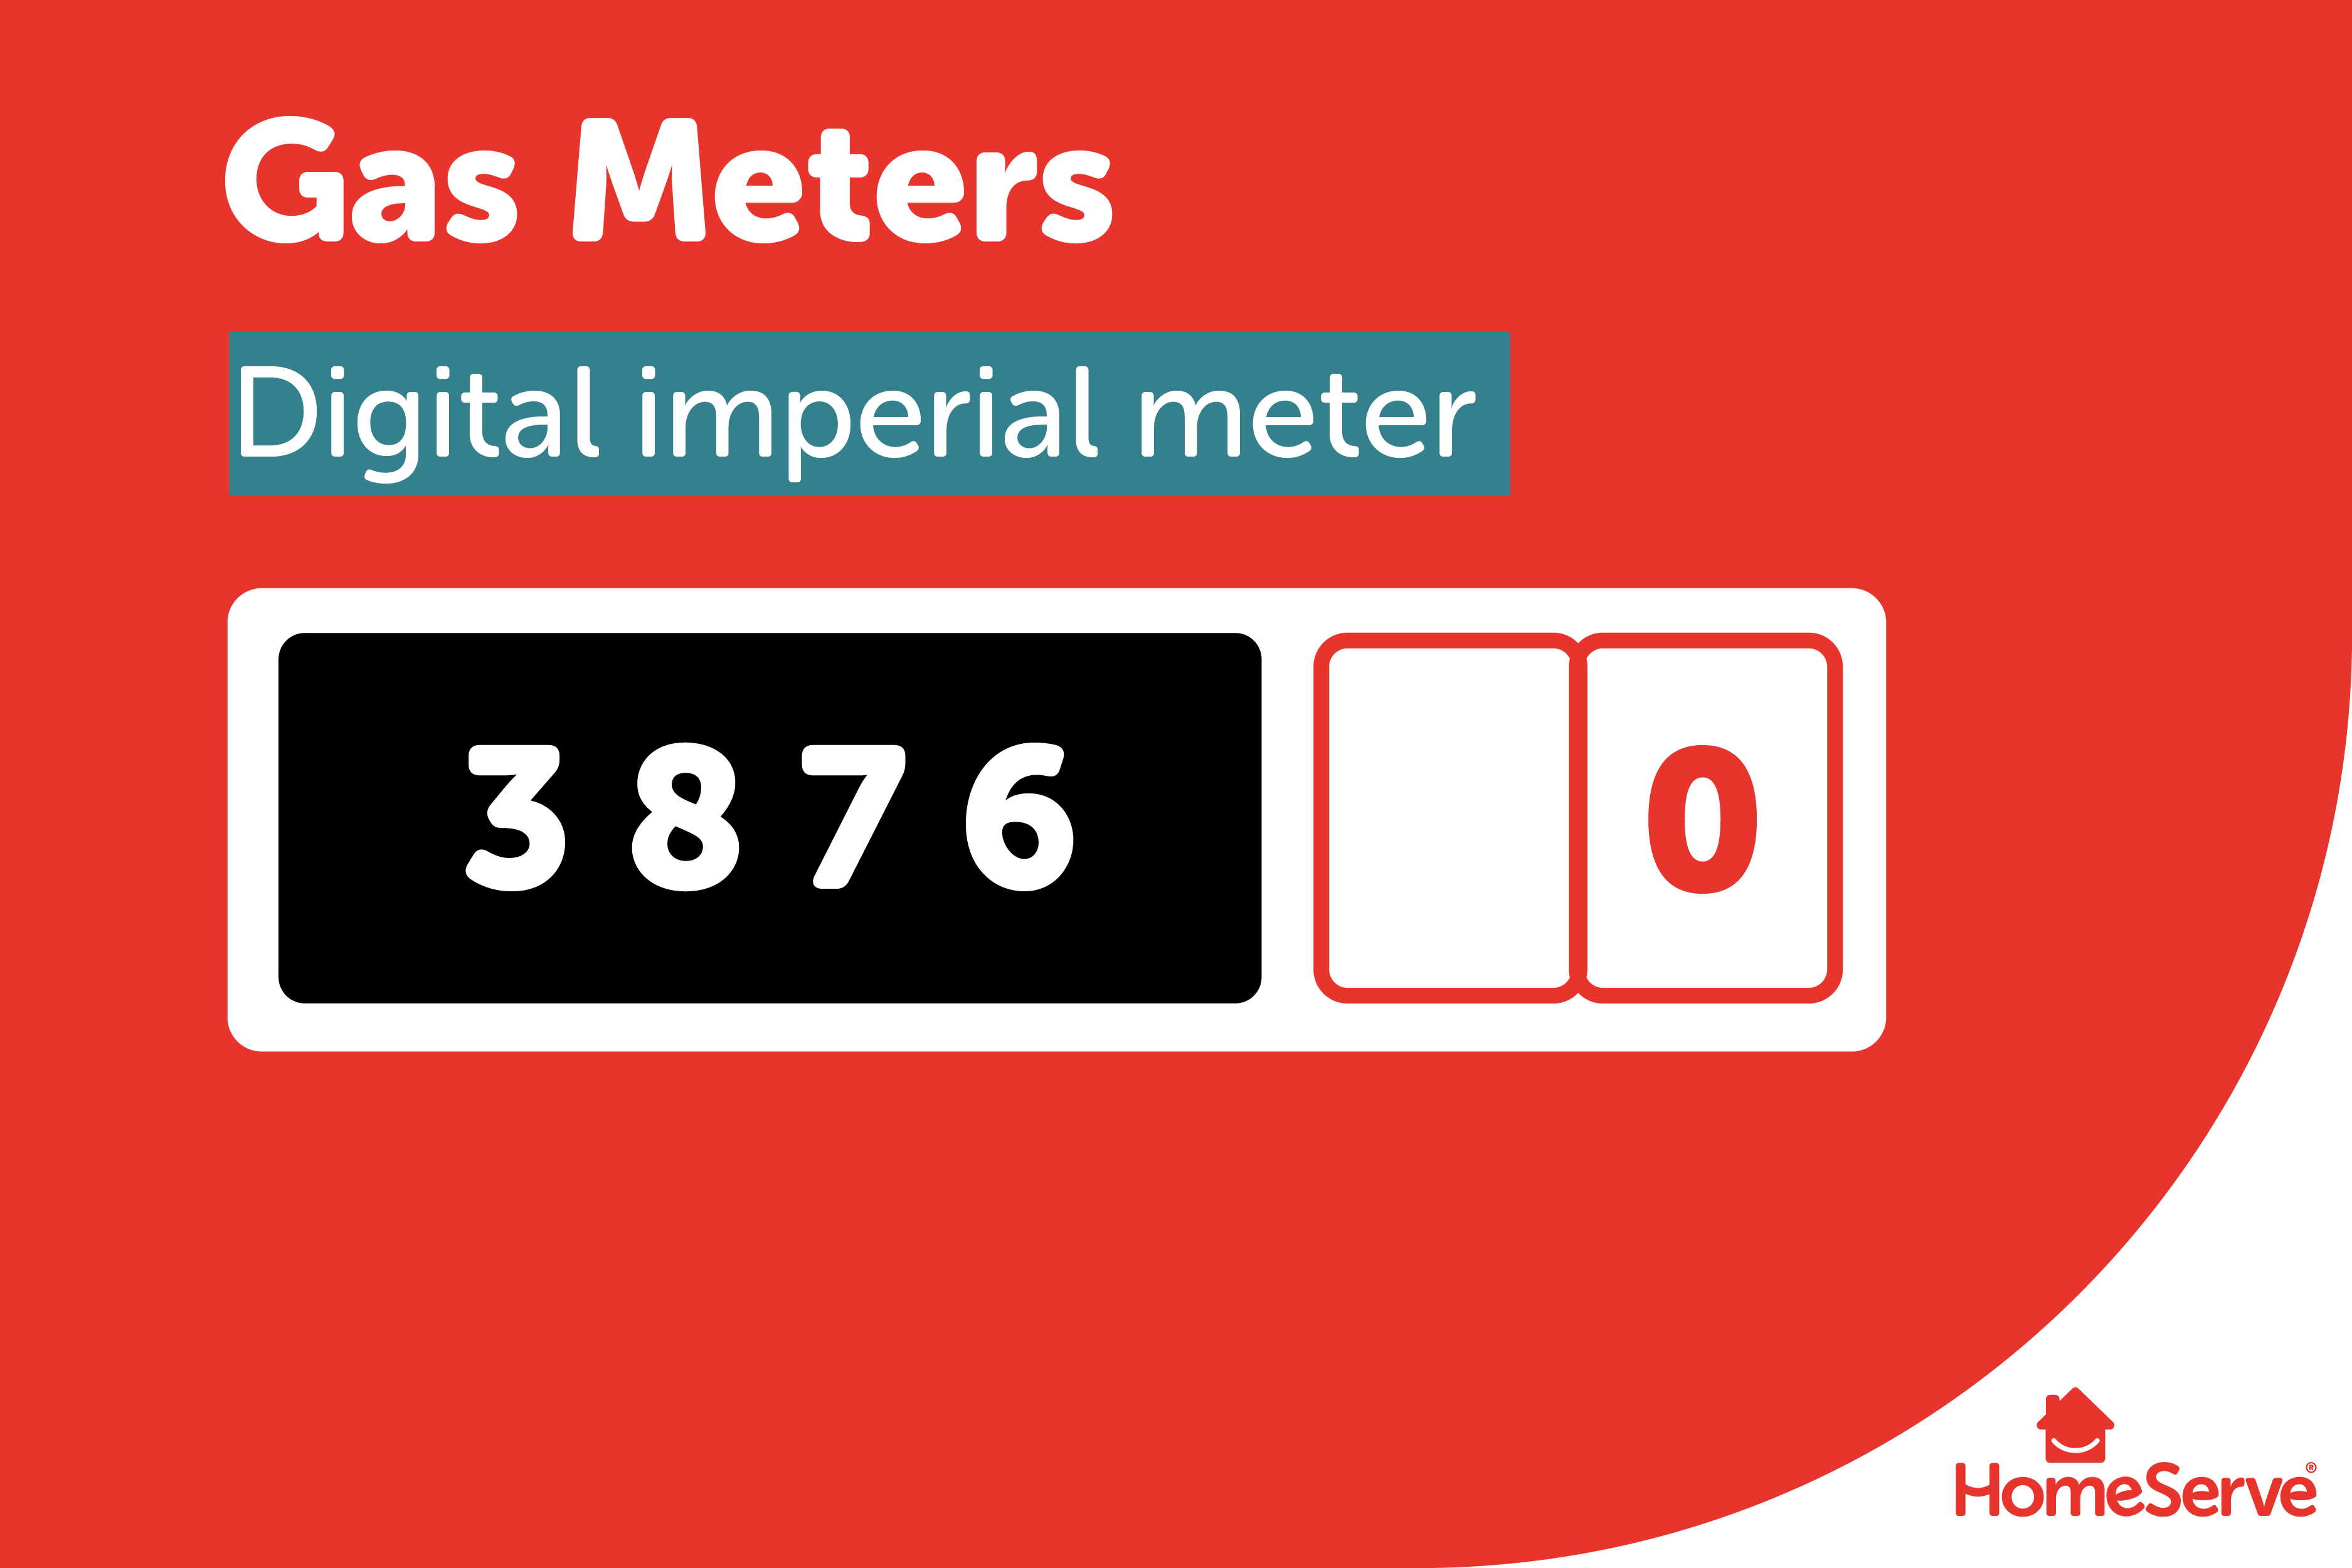 A diagram of a digital imperial gas meter